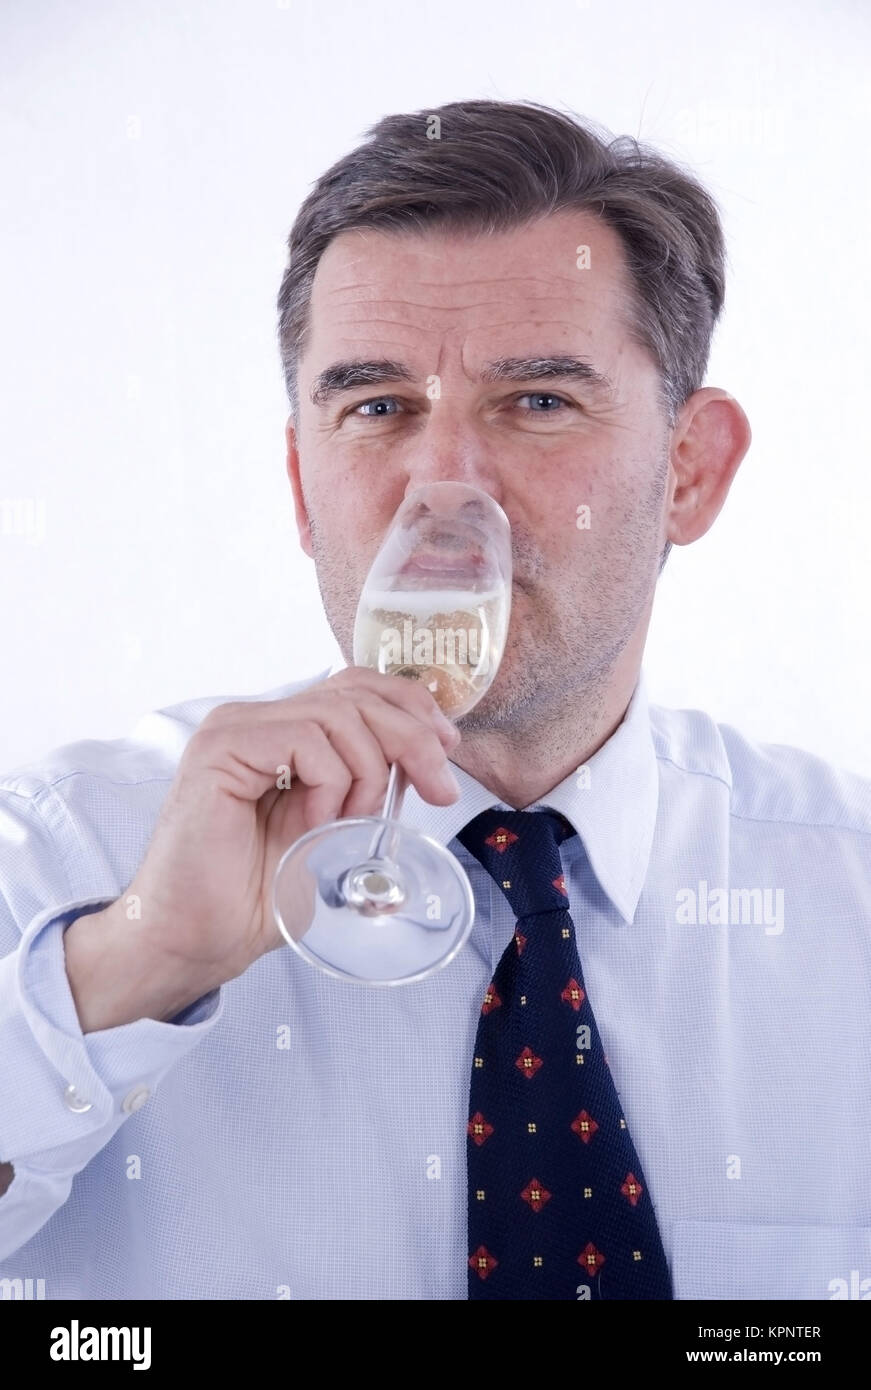 Model release , Geschaeftsmann trinkt ein Glas Sekt - business man drinks sparkling wine Stock Photo